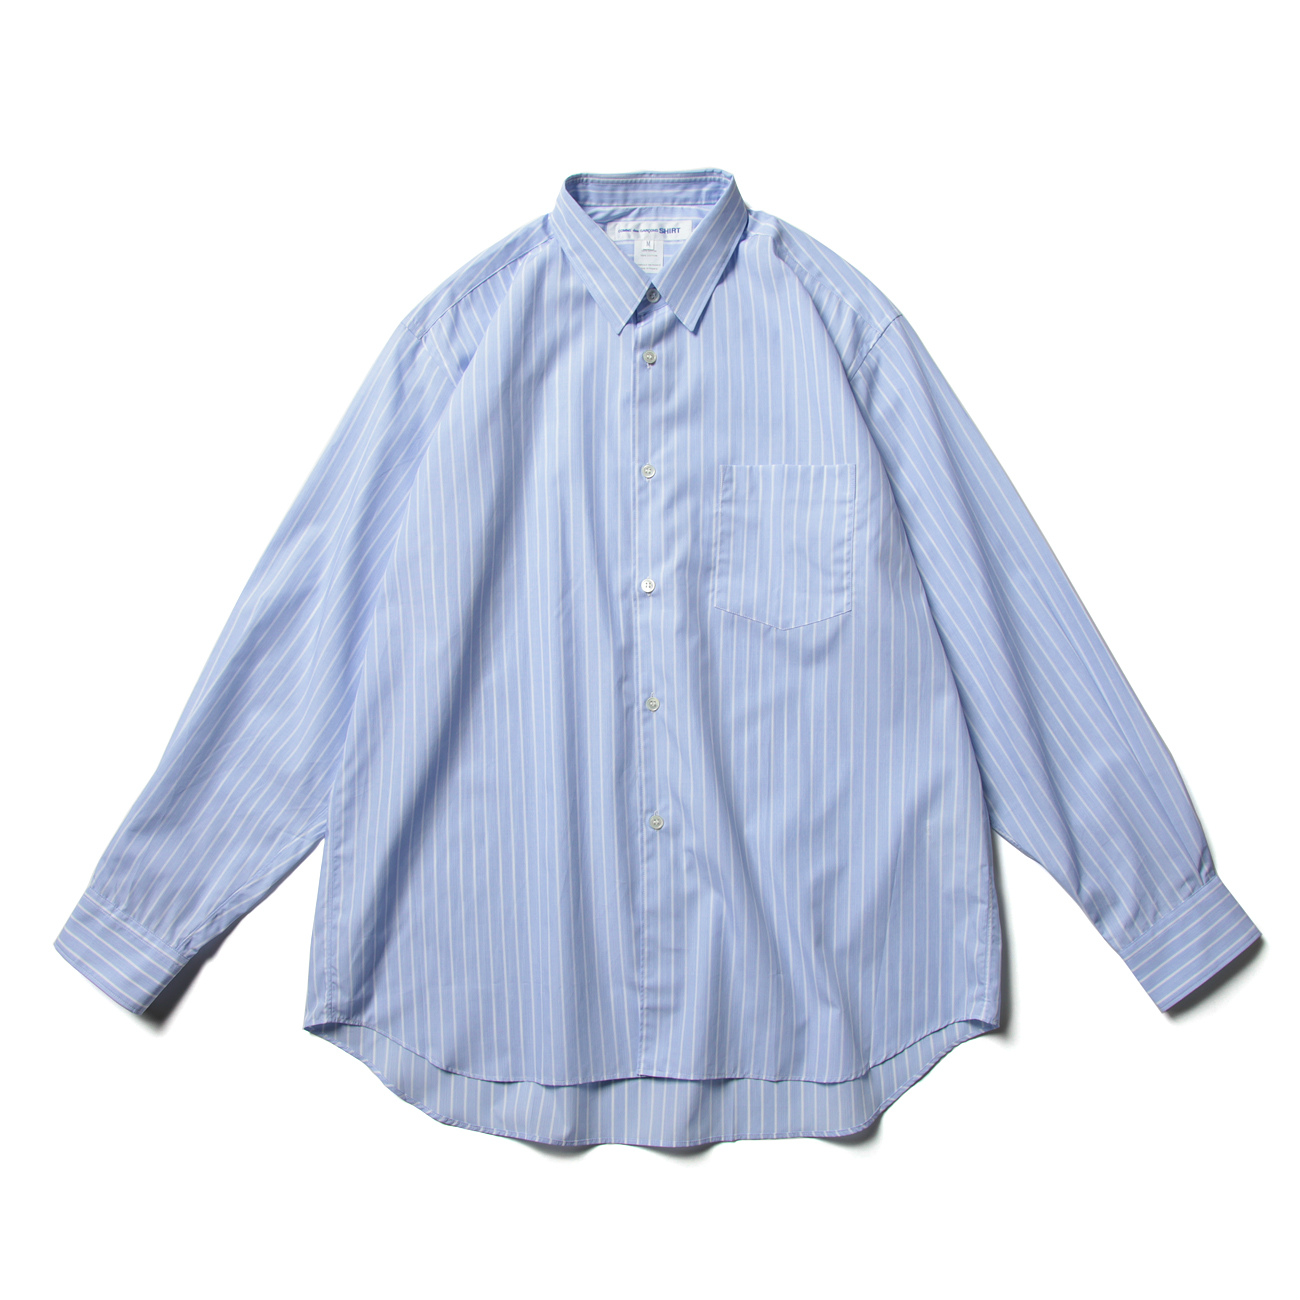 Sサイズコムデギャルソンシャツ 半袖Tシャツ SHIRT ギャルソンシャツ W18089